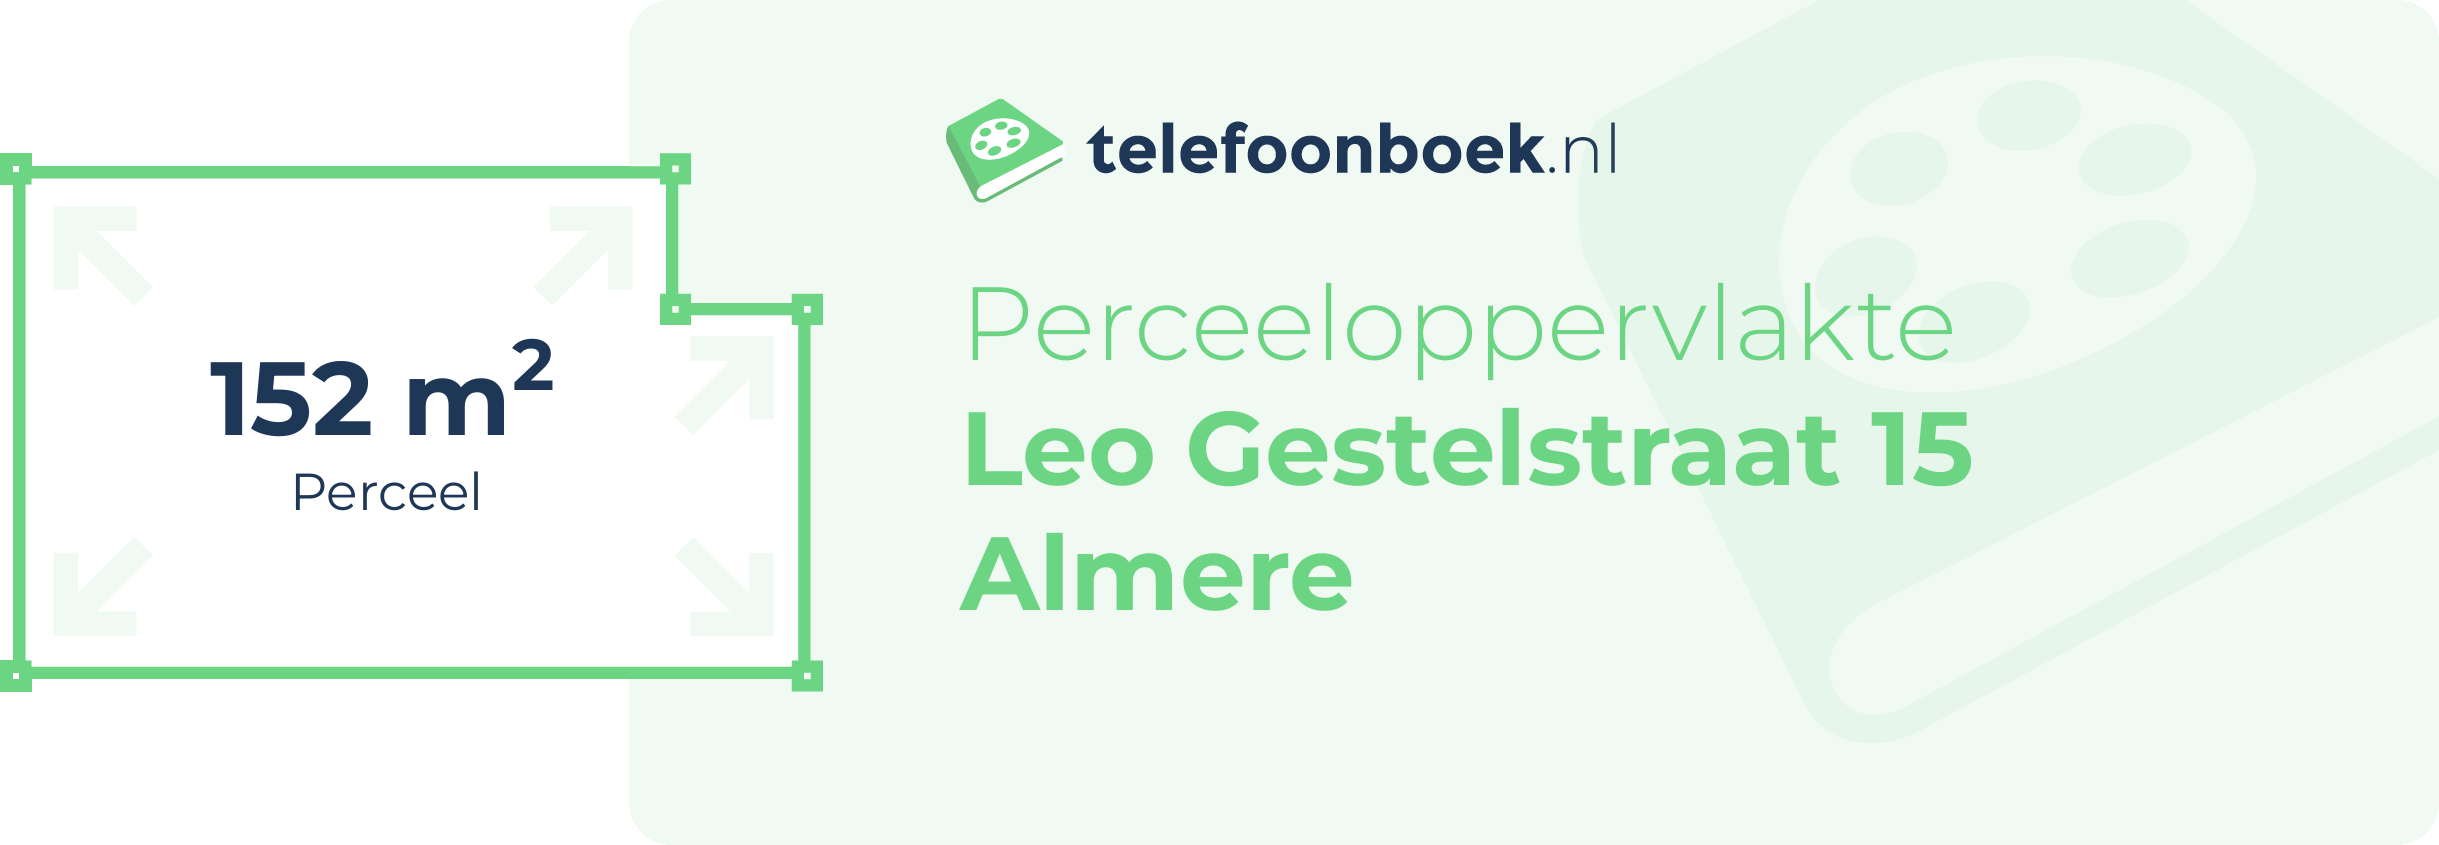 Perceeloppervlakte Leo Gestelstraat 15 Almere